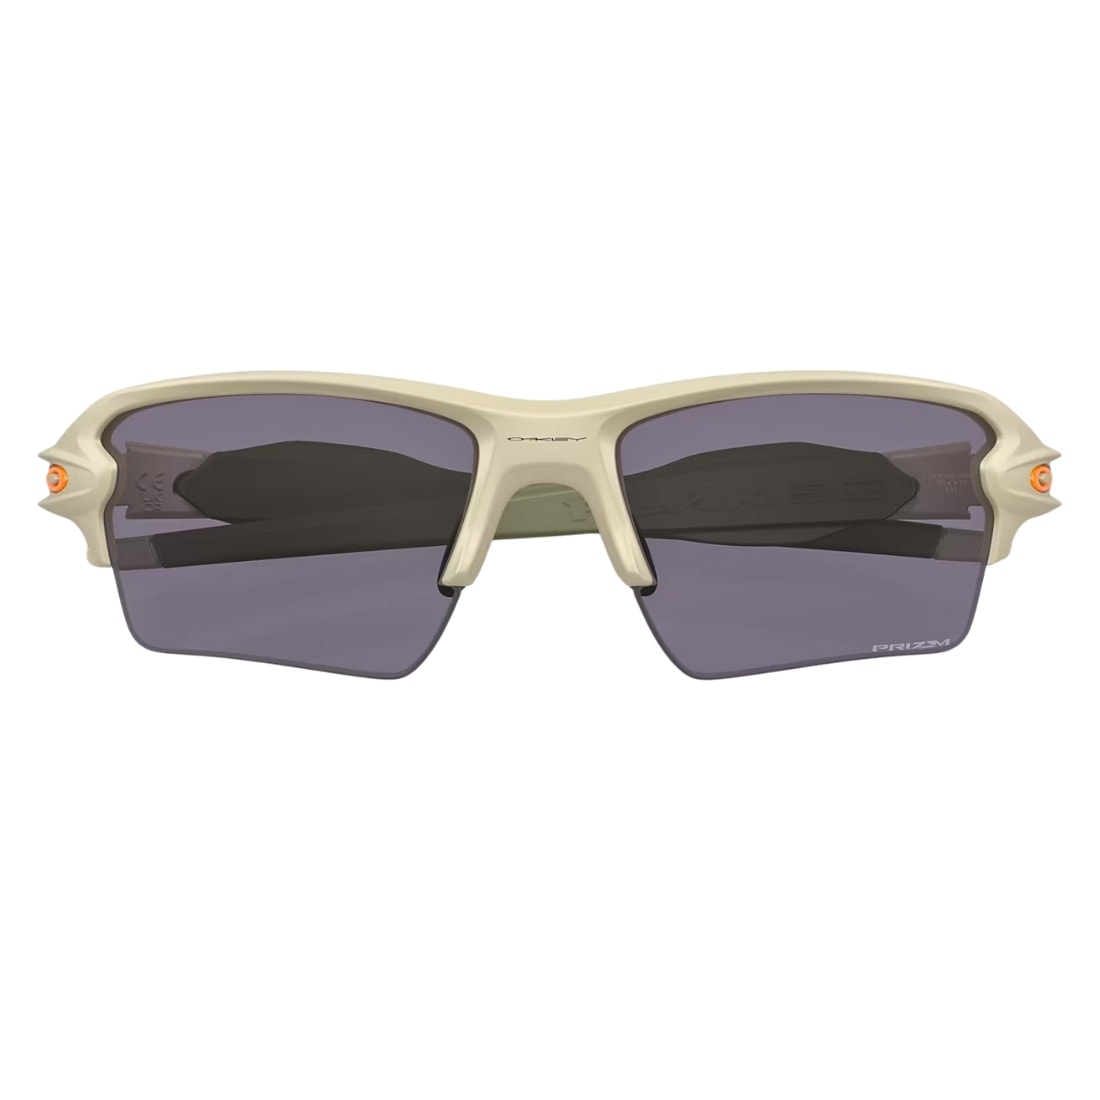 Oakley Flak 2.0 XL Sunglasses - Mattle Sand/Prizm Grey